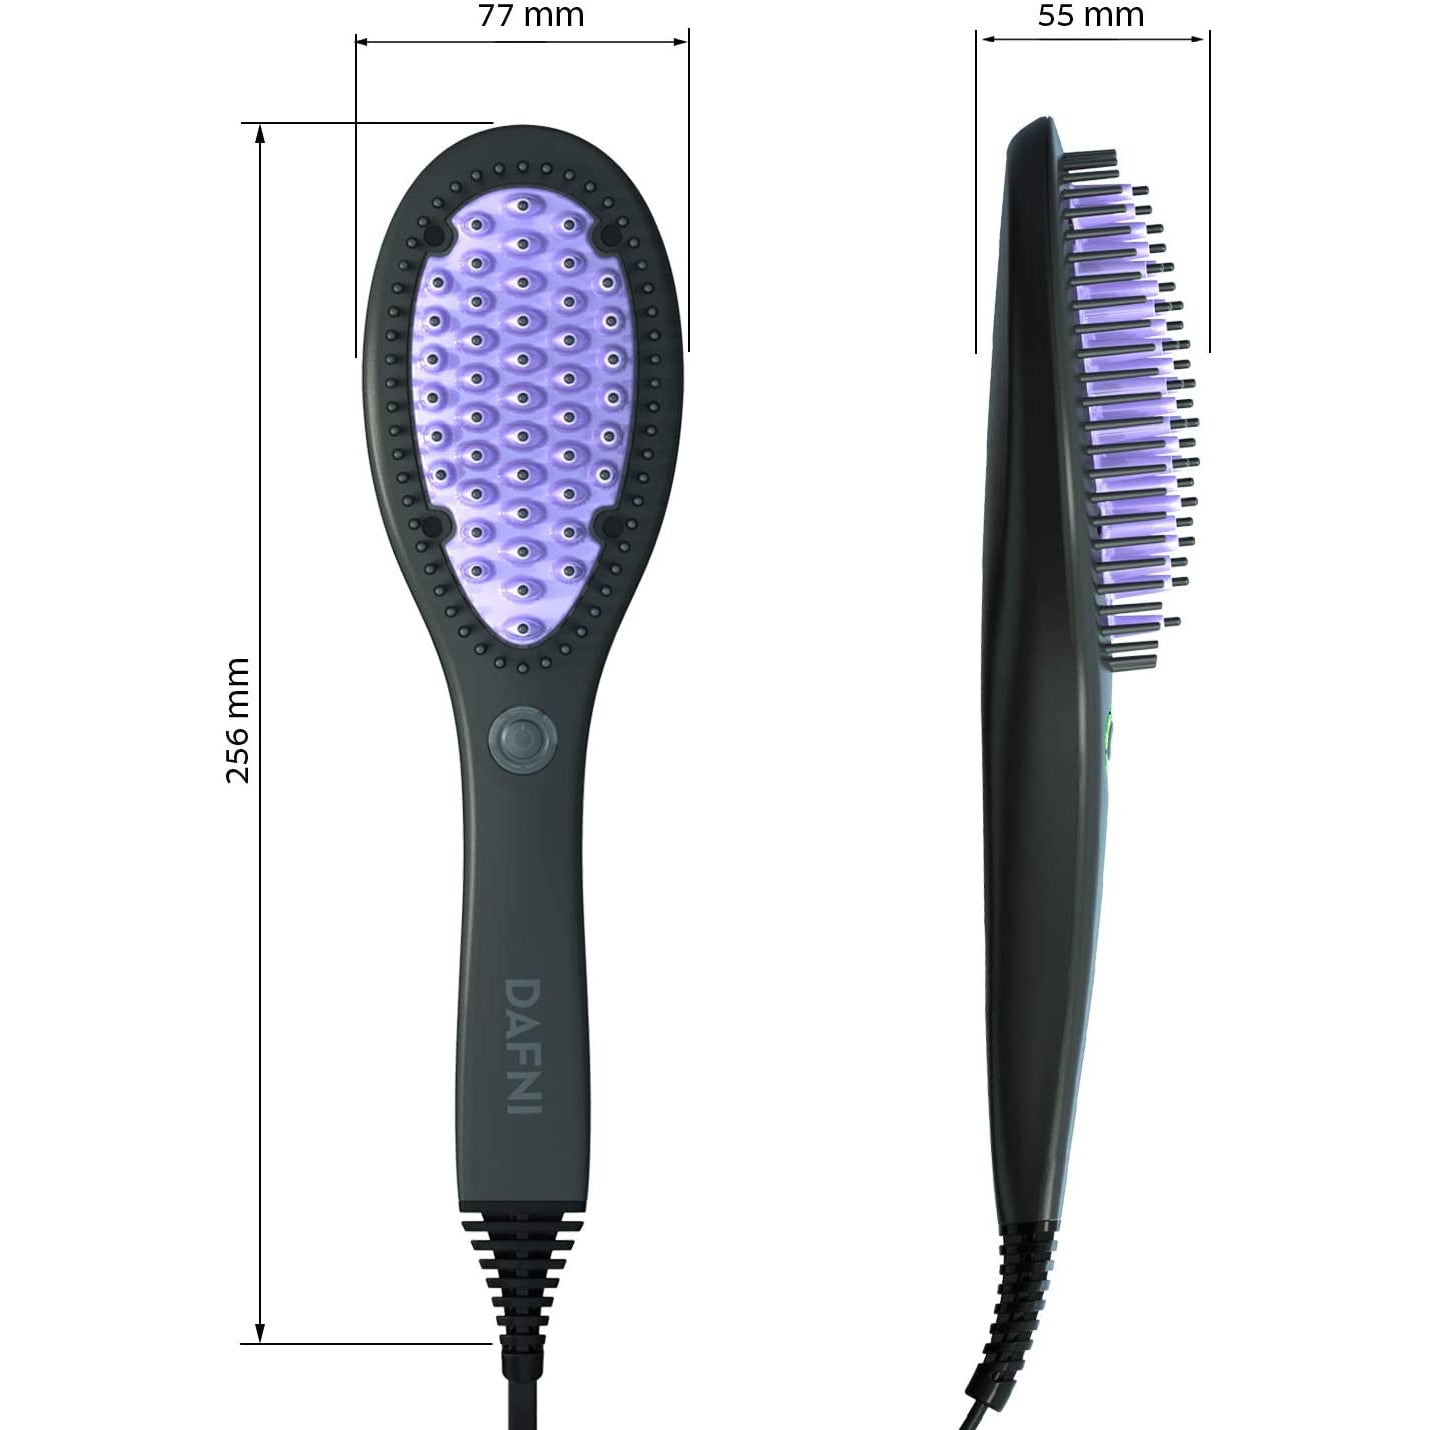 Dafni Hair Straightening Brush, Styles Hair Up to 10 Times Faster Than a Flat Iron, EU Plug, Black